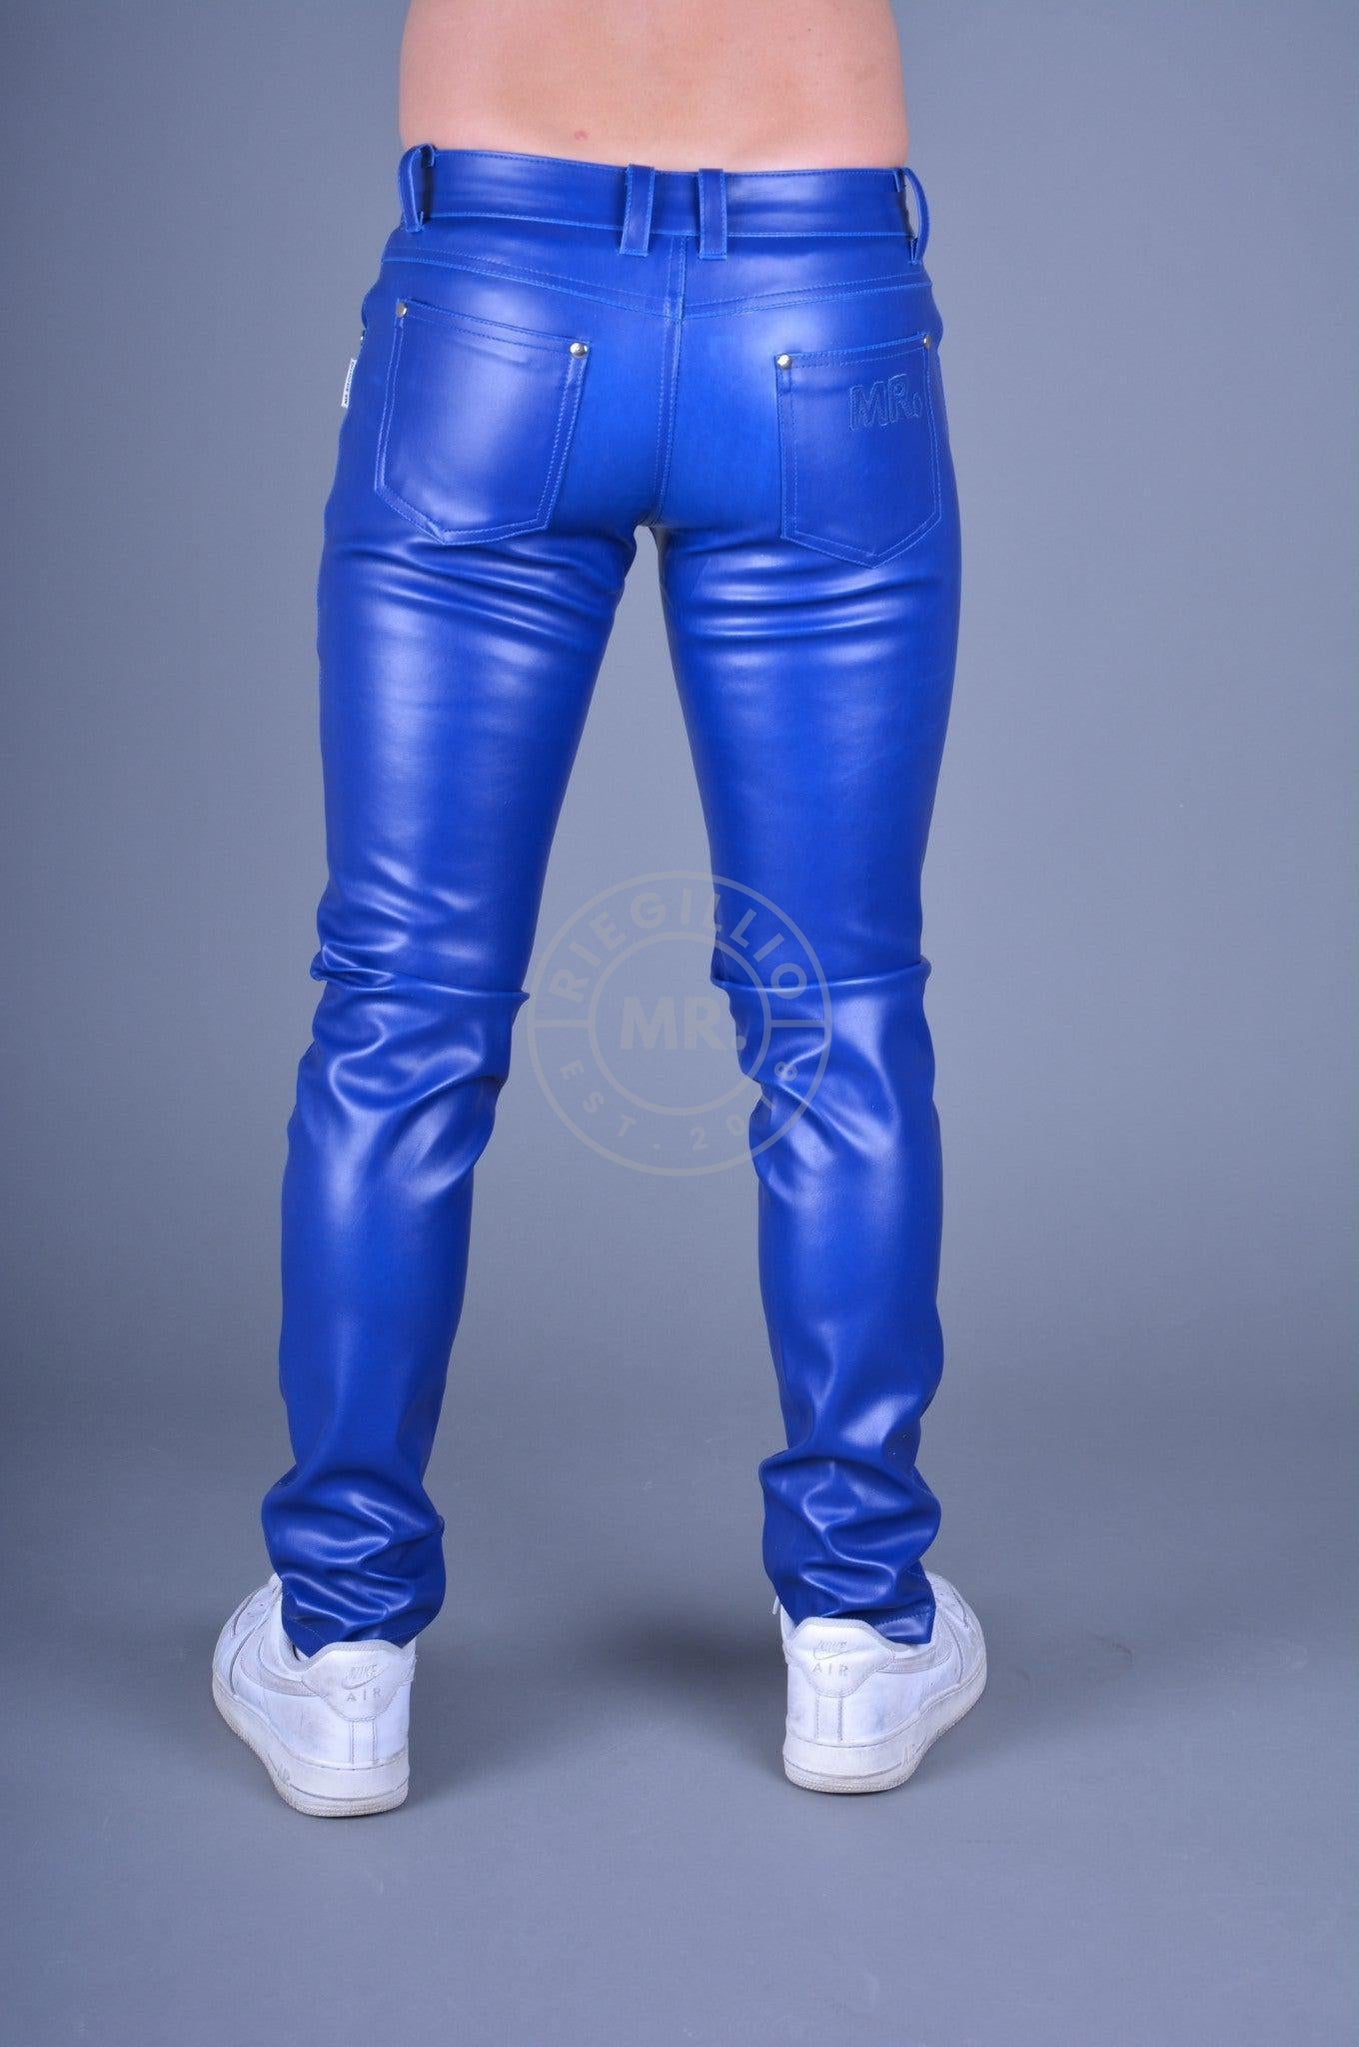 Leather pants, vegan, royal blue